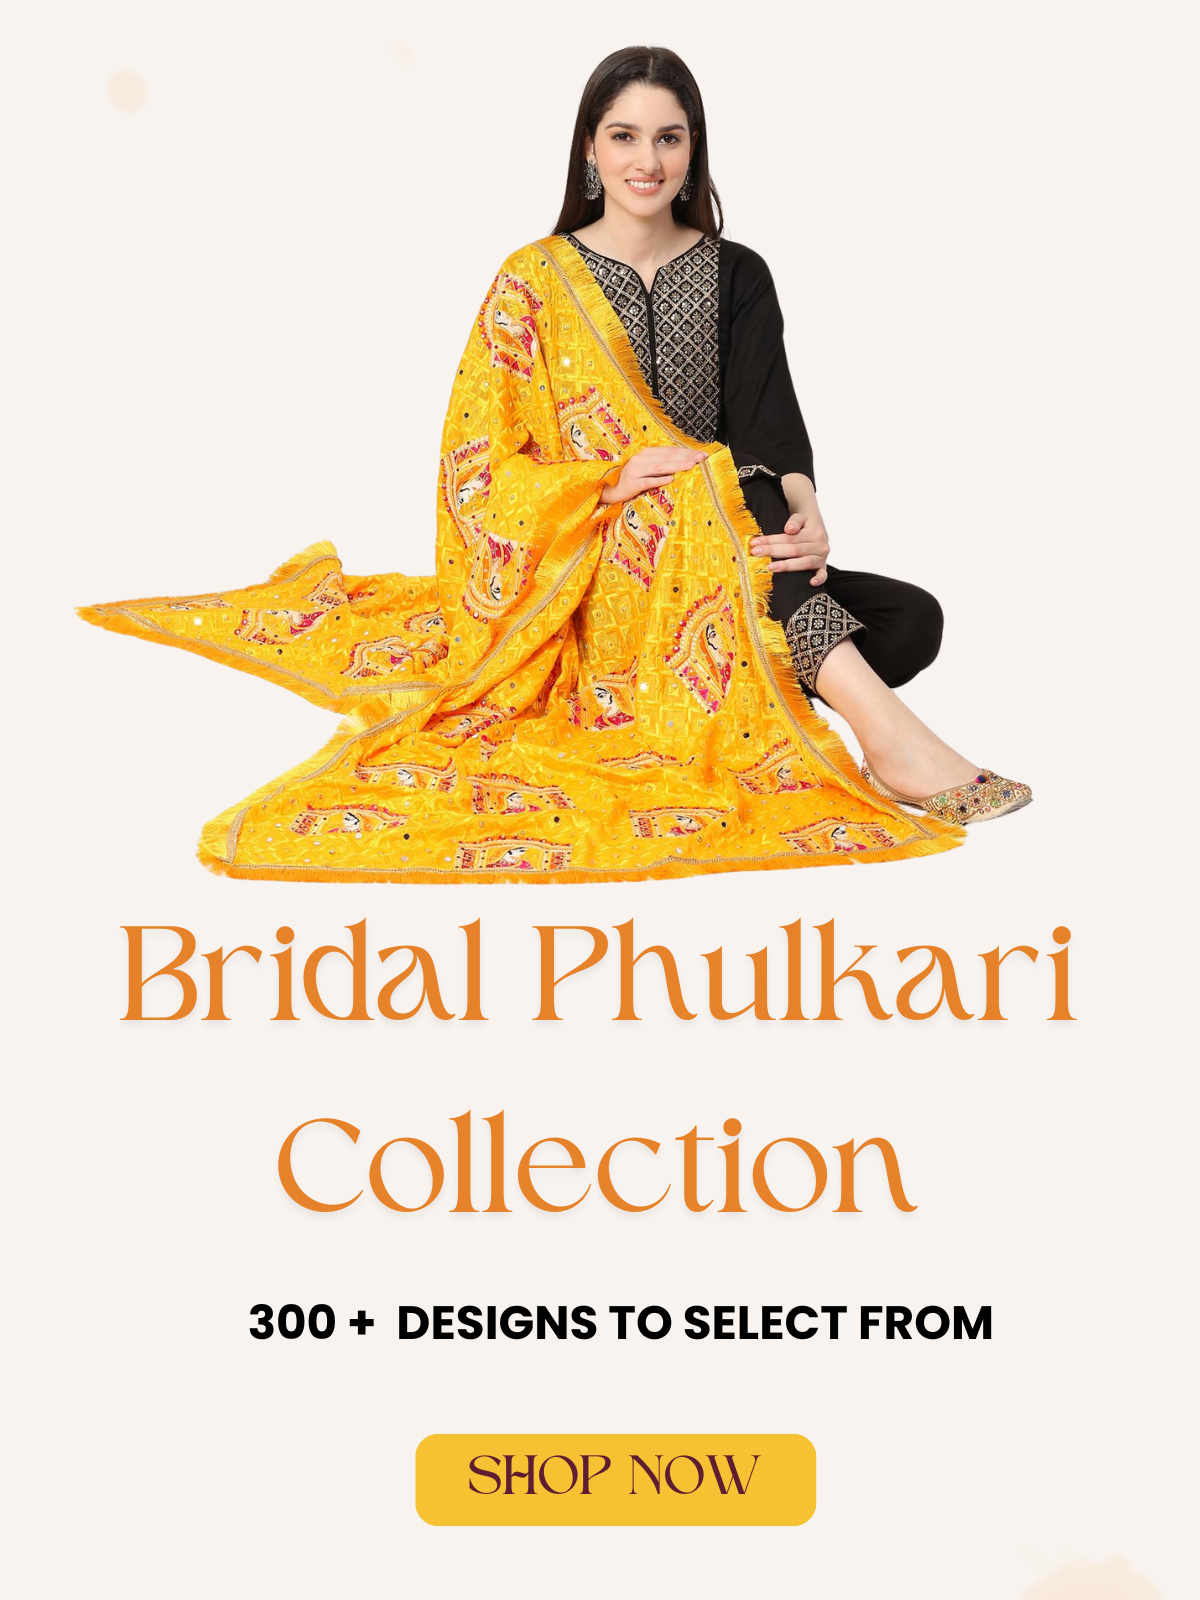 Buy Bridal Phulkari Dupatta Online at Moda Chales